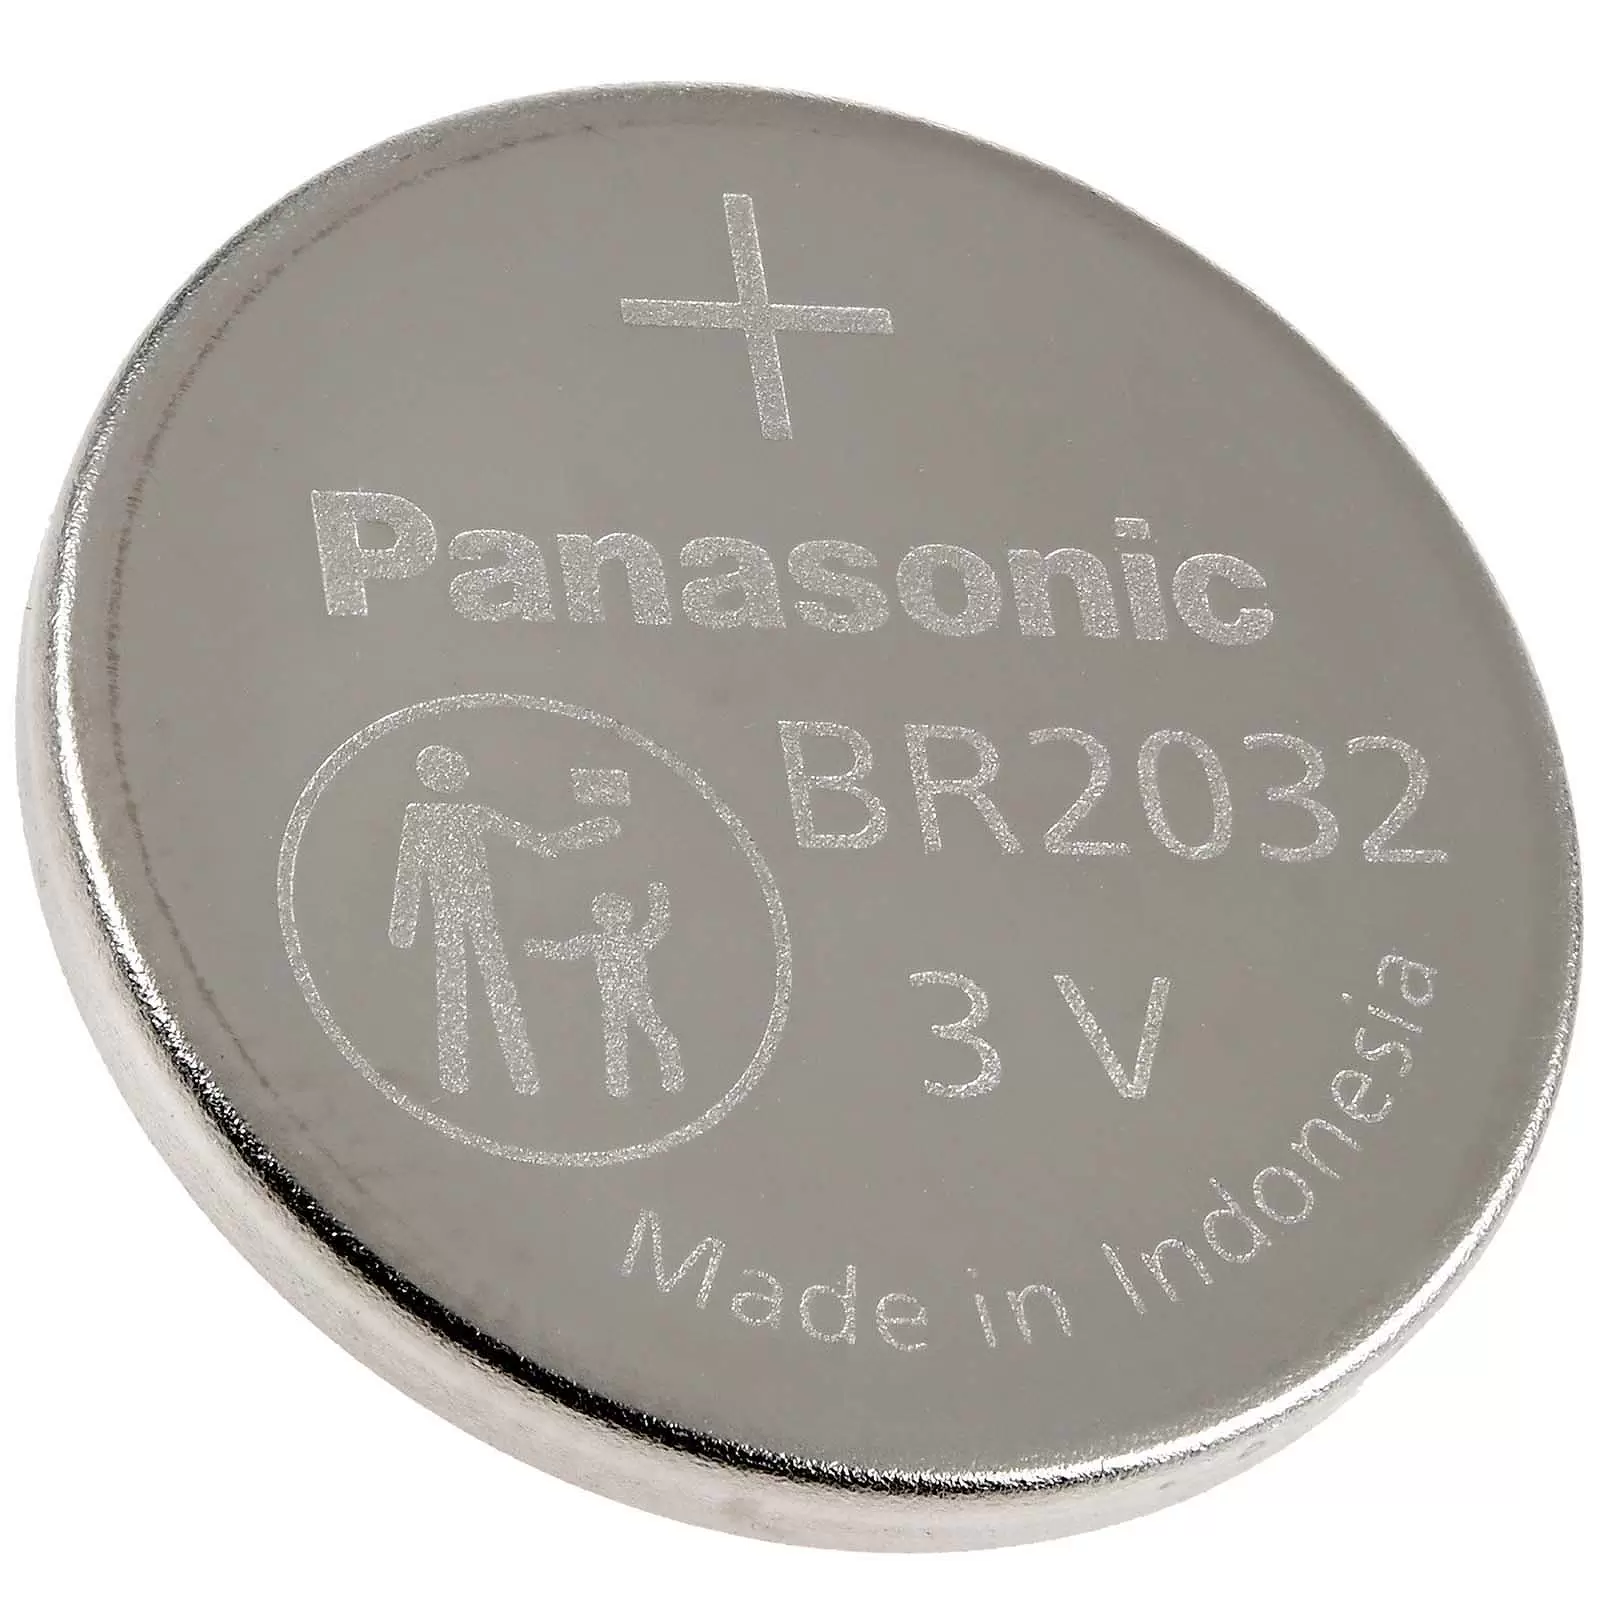 Lithium Knopfzelle Panasonic BR2032 BR-2032/BN 20mm